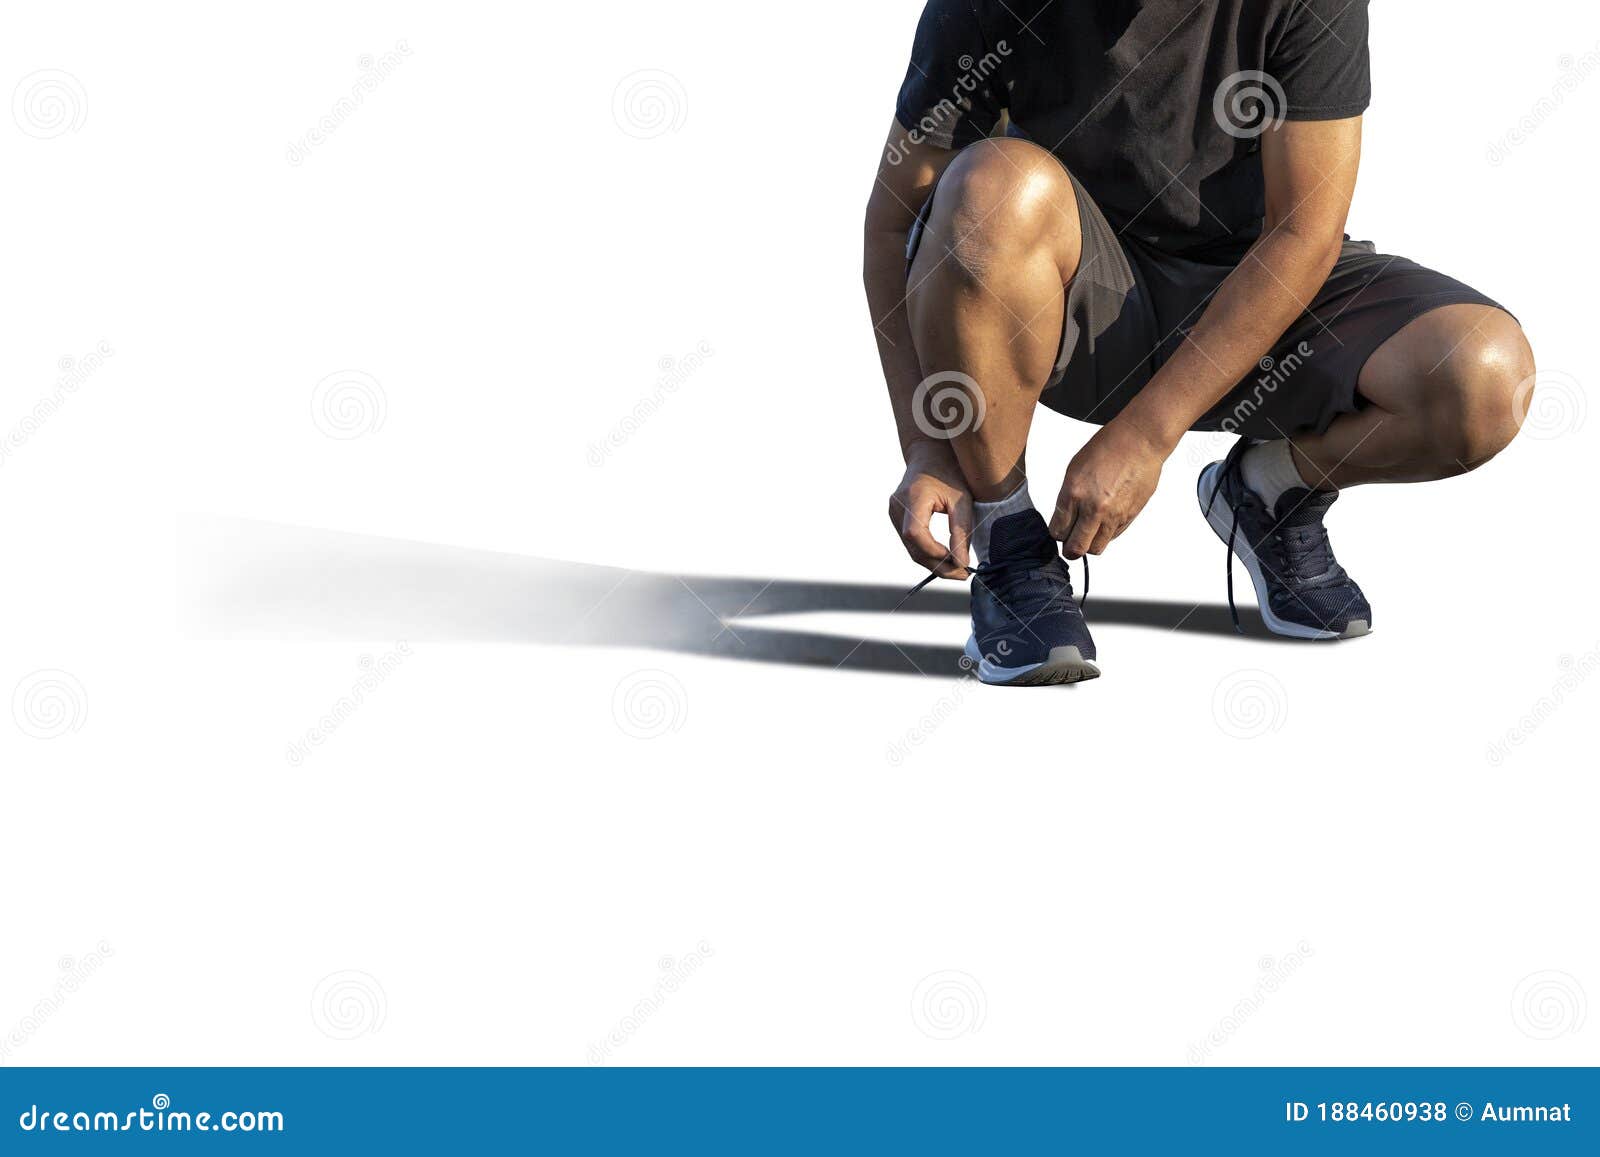 Un Hombre Con Ropa Deportiva Corbata Zapato Antes De Hacer